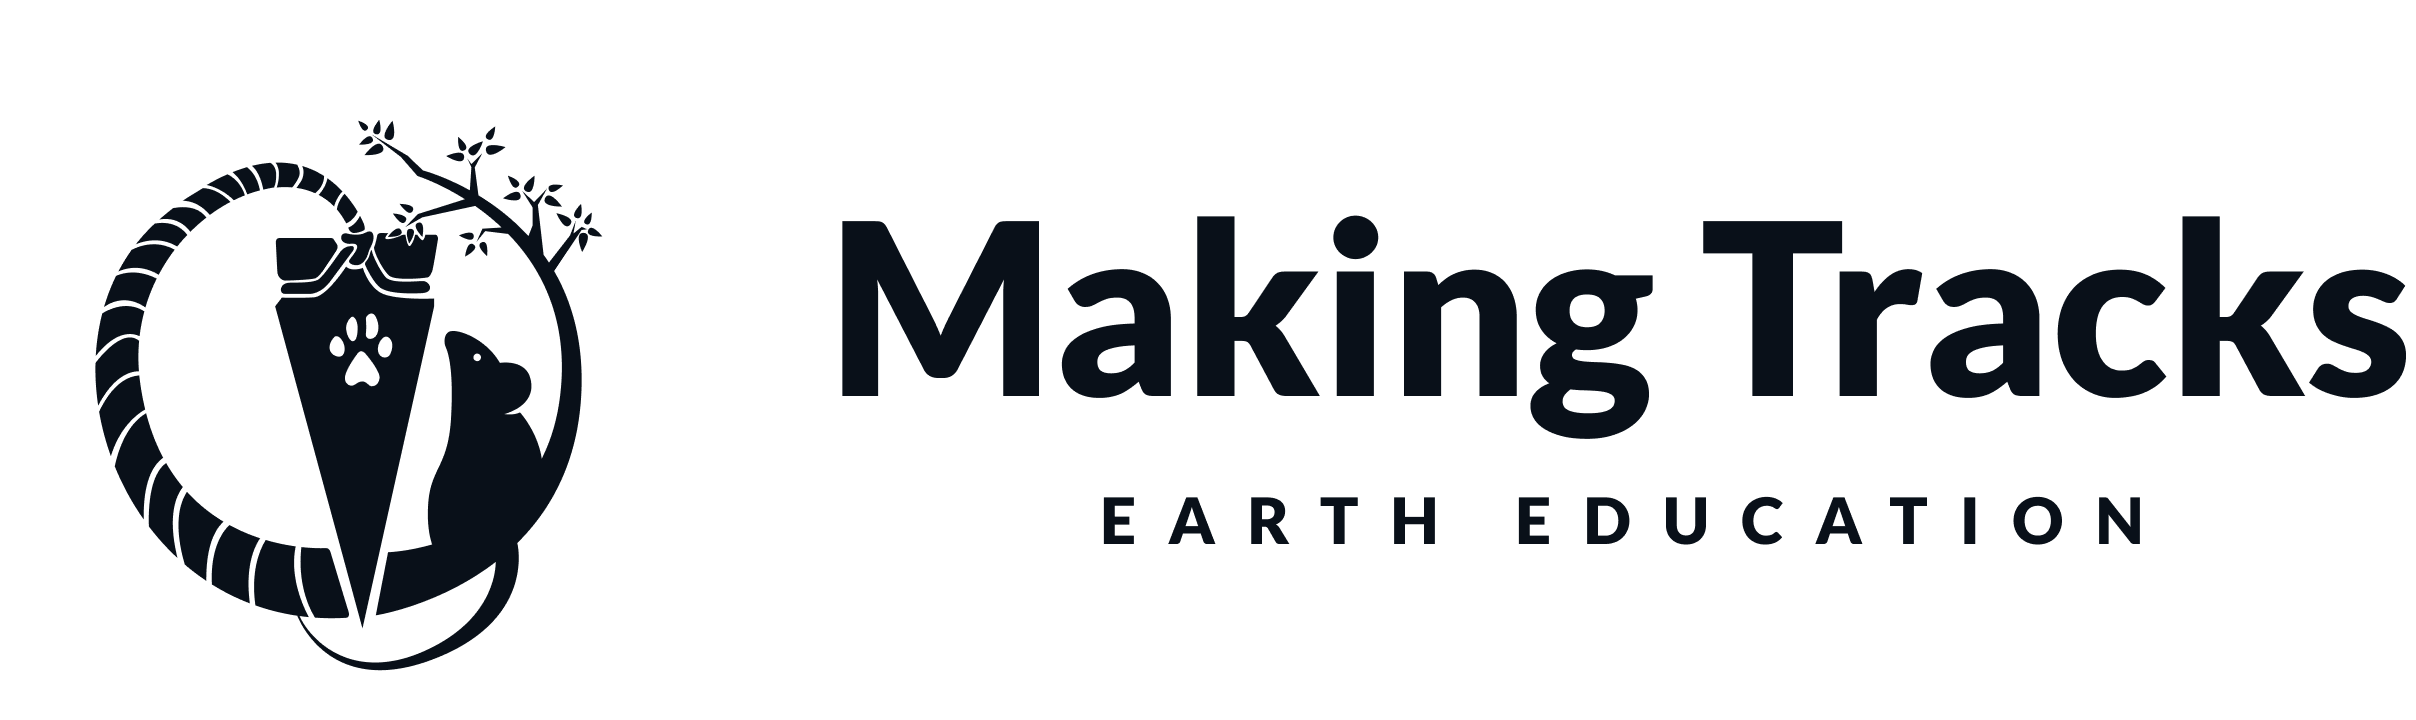 Making Tracks Earth Education